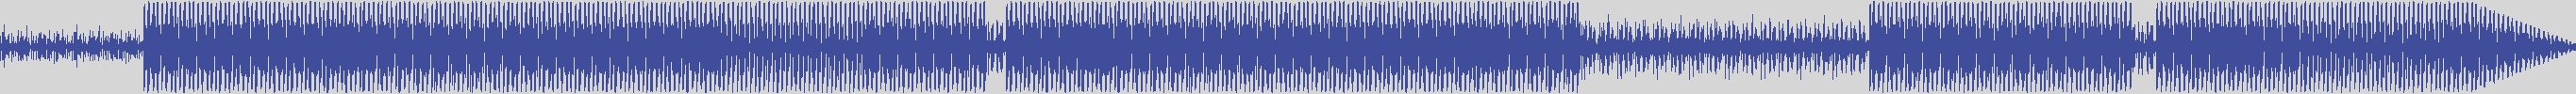 nf_boyz_records [NFY056] Nick Evaneshens - The Creation [Original Mix] audio wave form